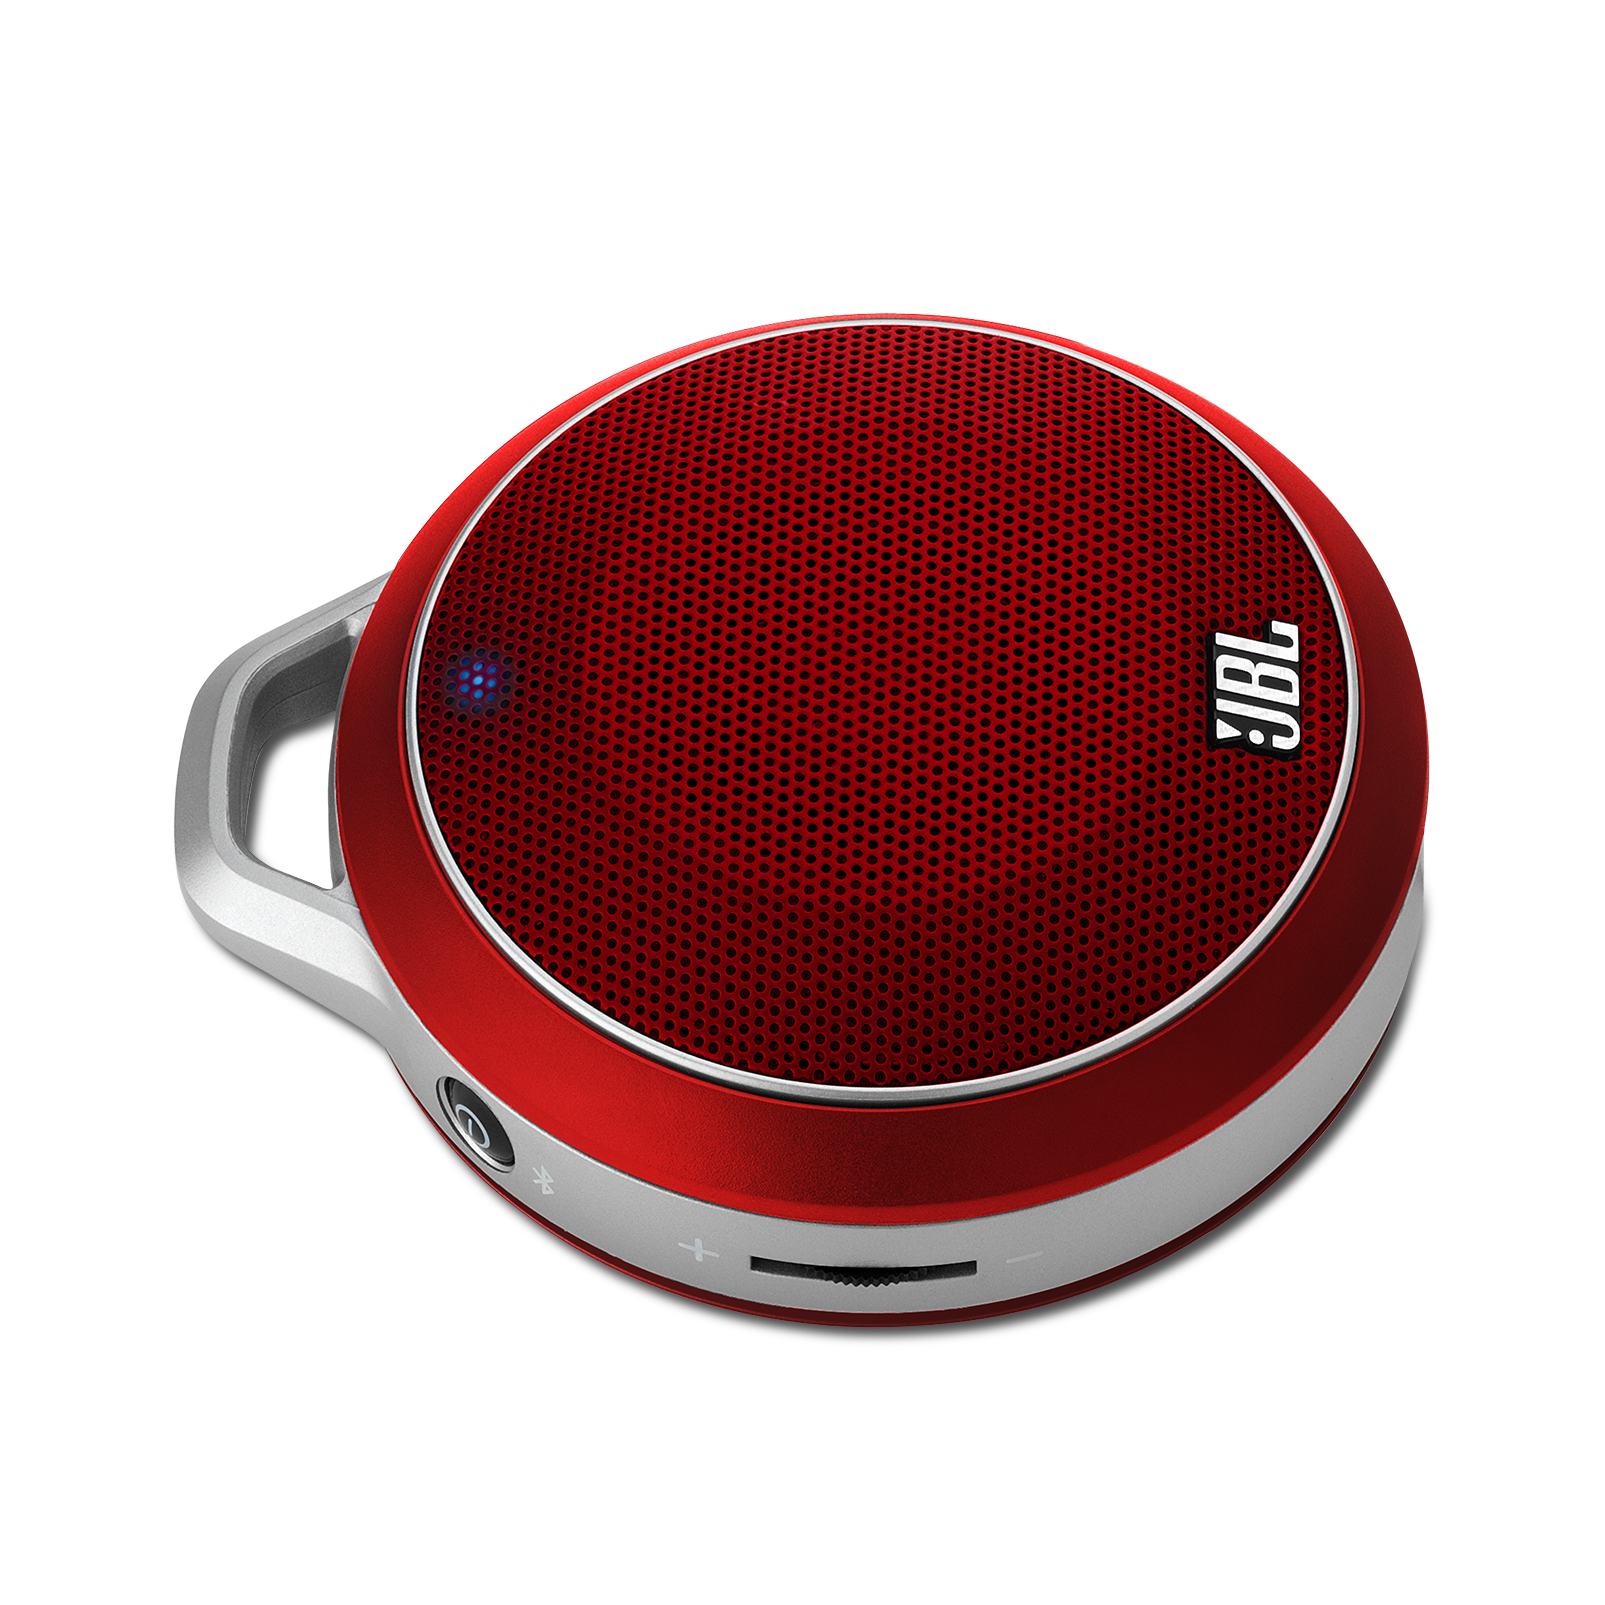 JBL Micro Wireless Ultraportable Bluetooth speaker with bass port